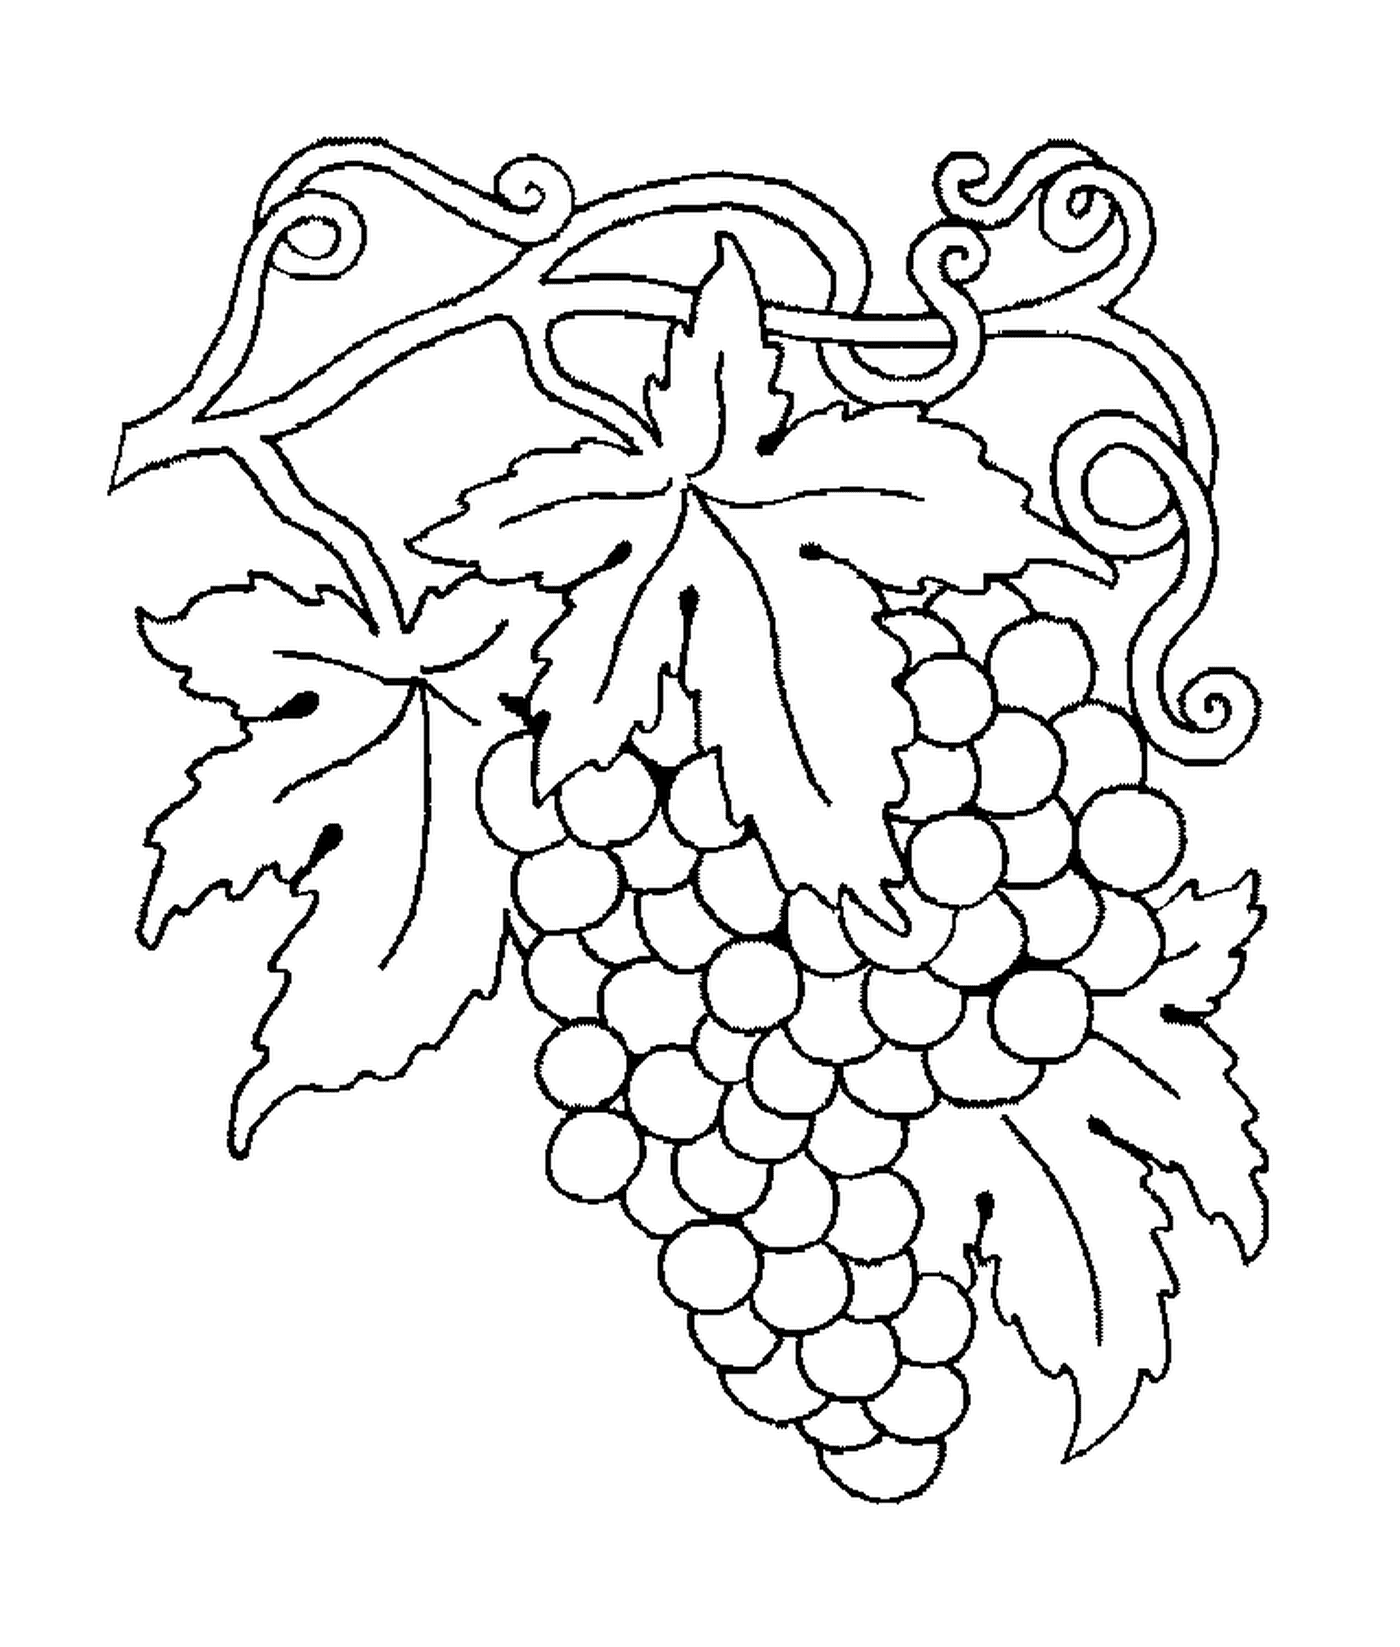  Mature grape grapples 